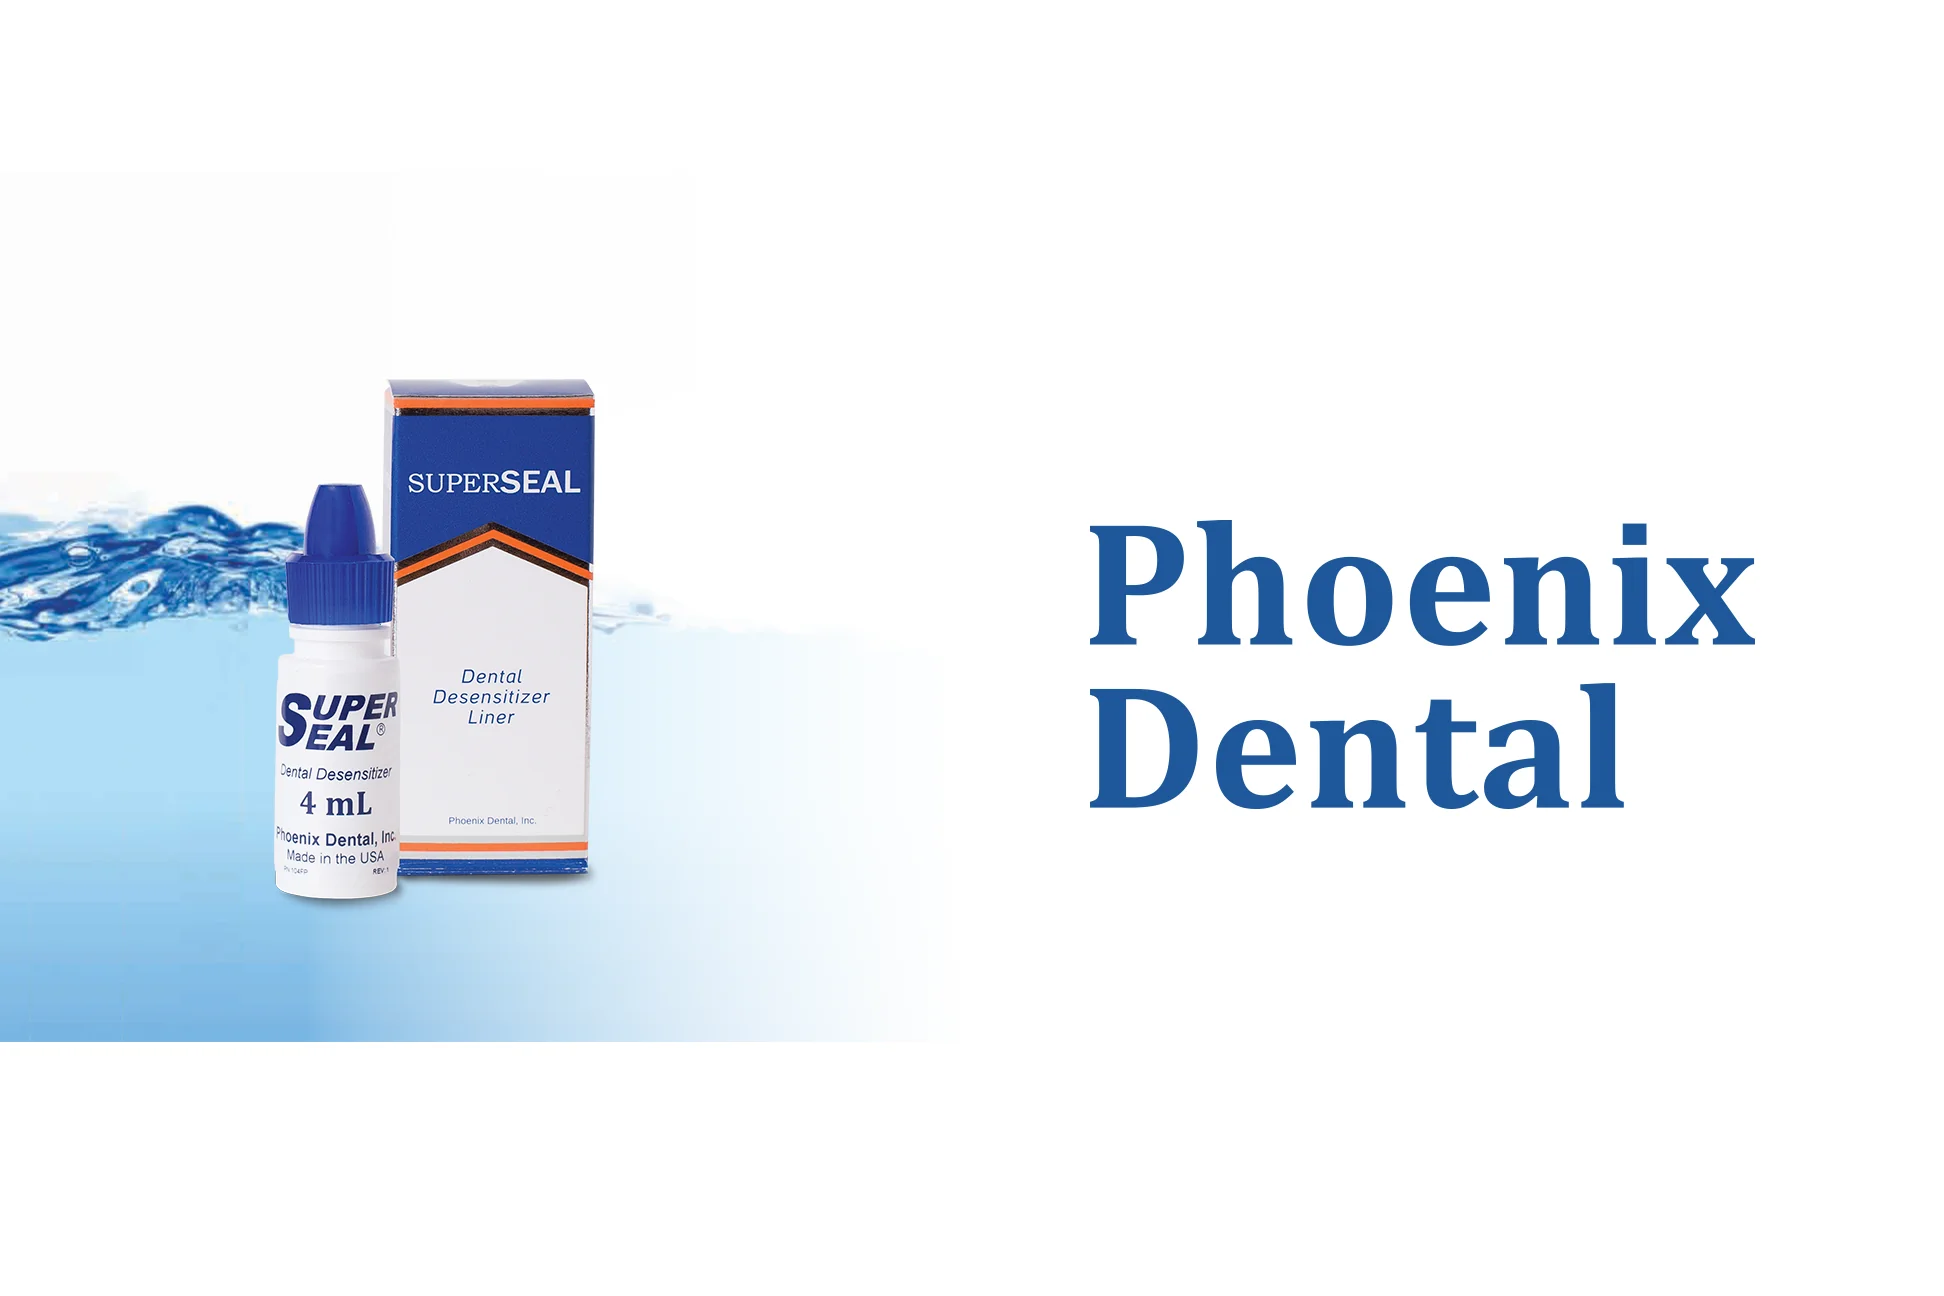 Phoenix Dental